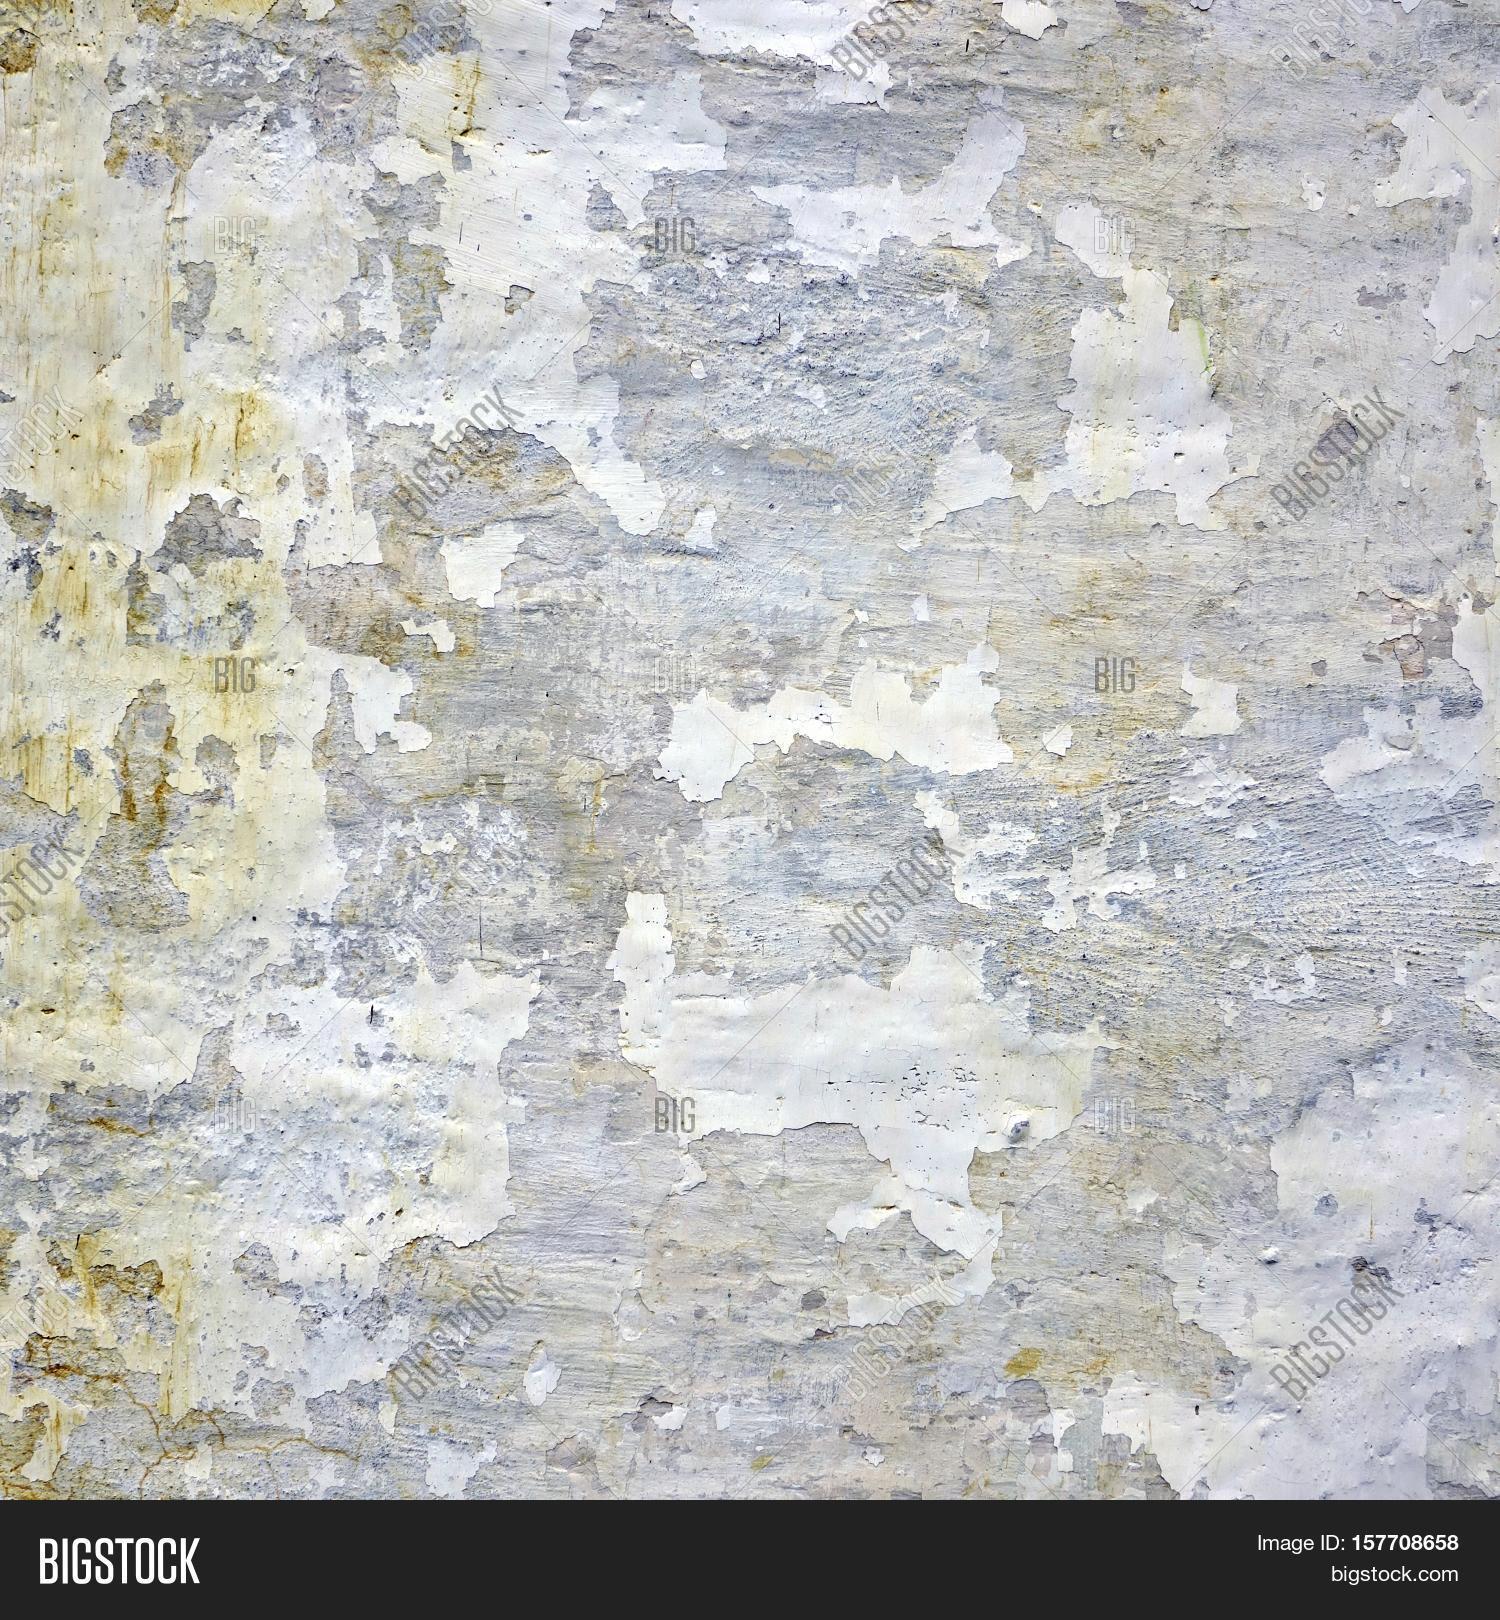 Decrepit White Peeled Plaster Wall Image & Photo | Bigstock